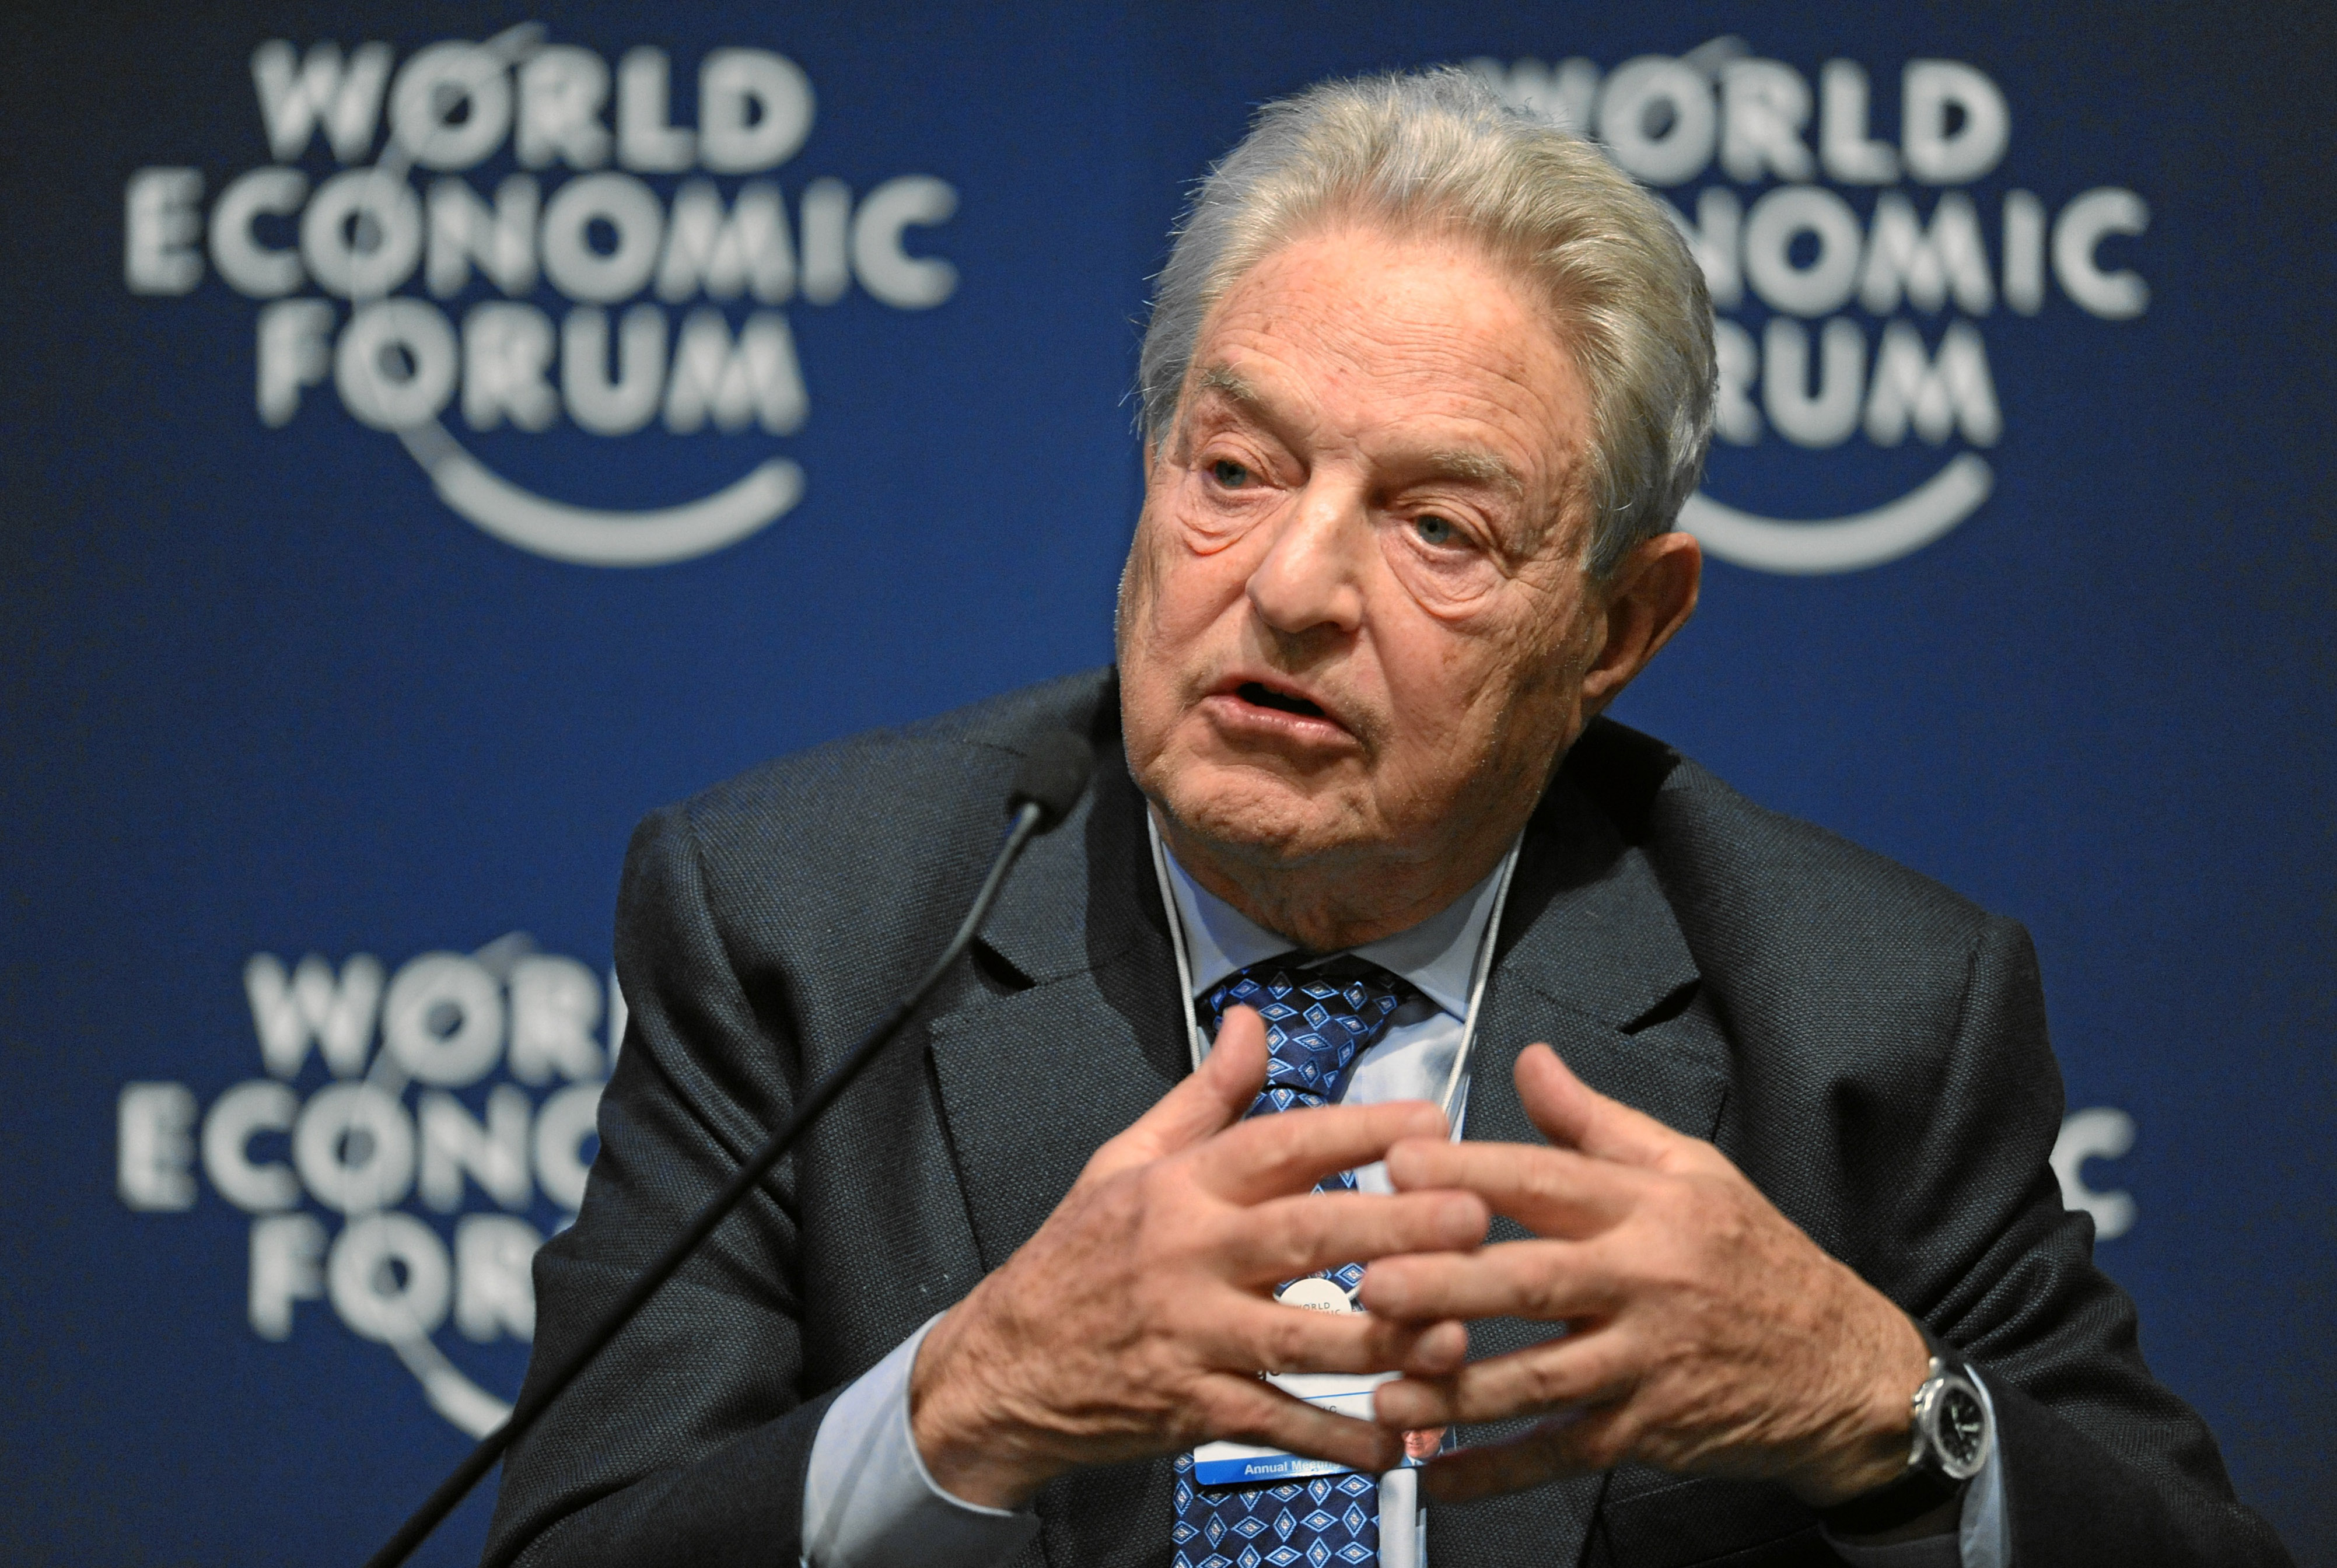 George Soros World Economic Forum Annual Meeting 2011